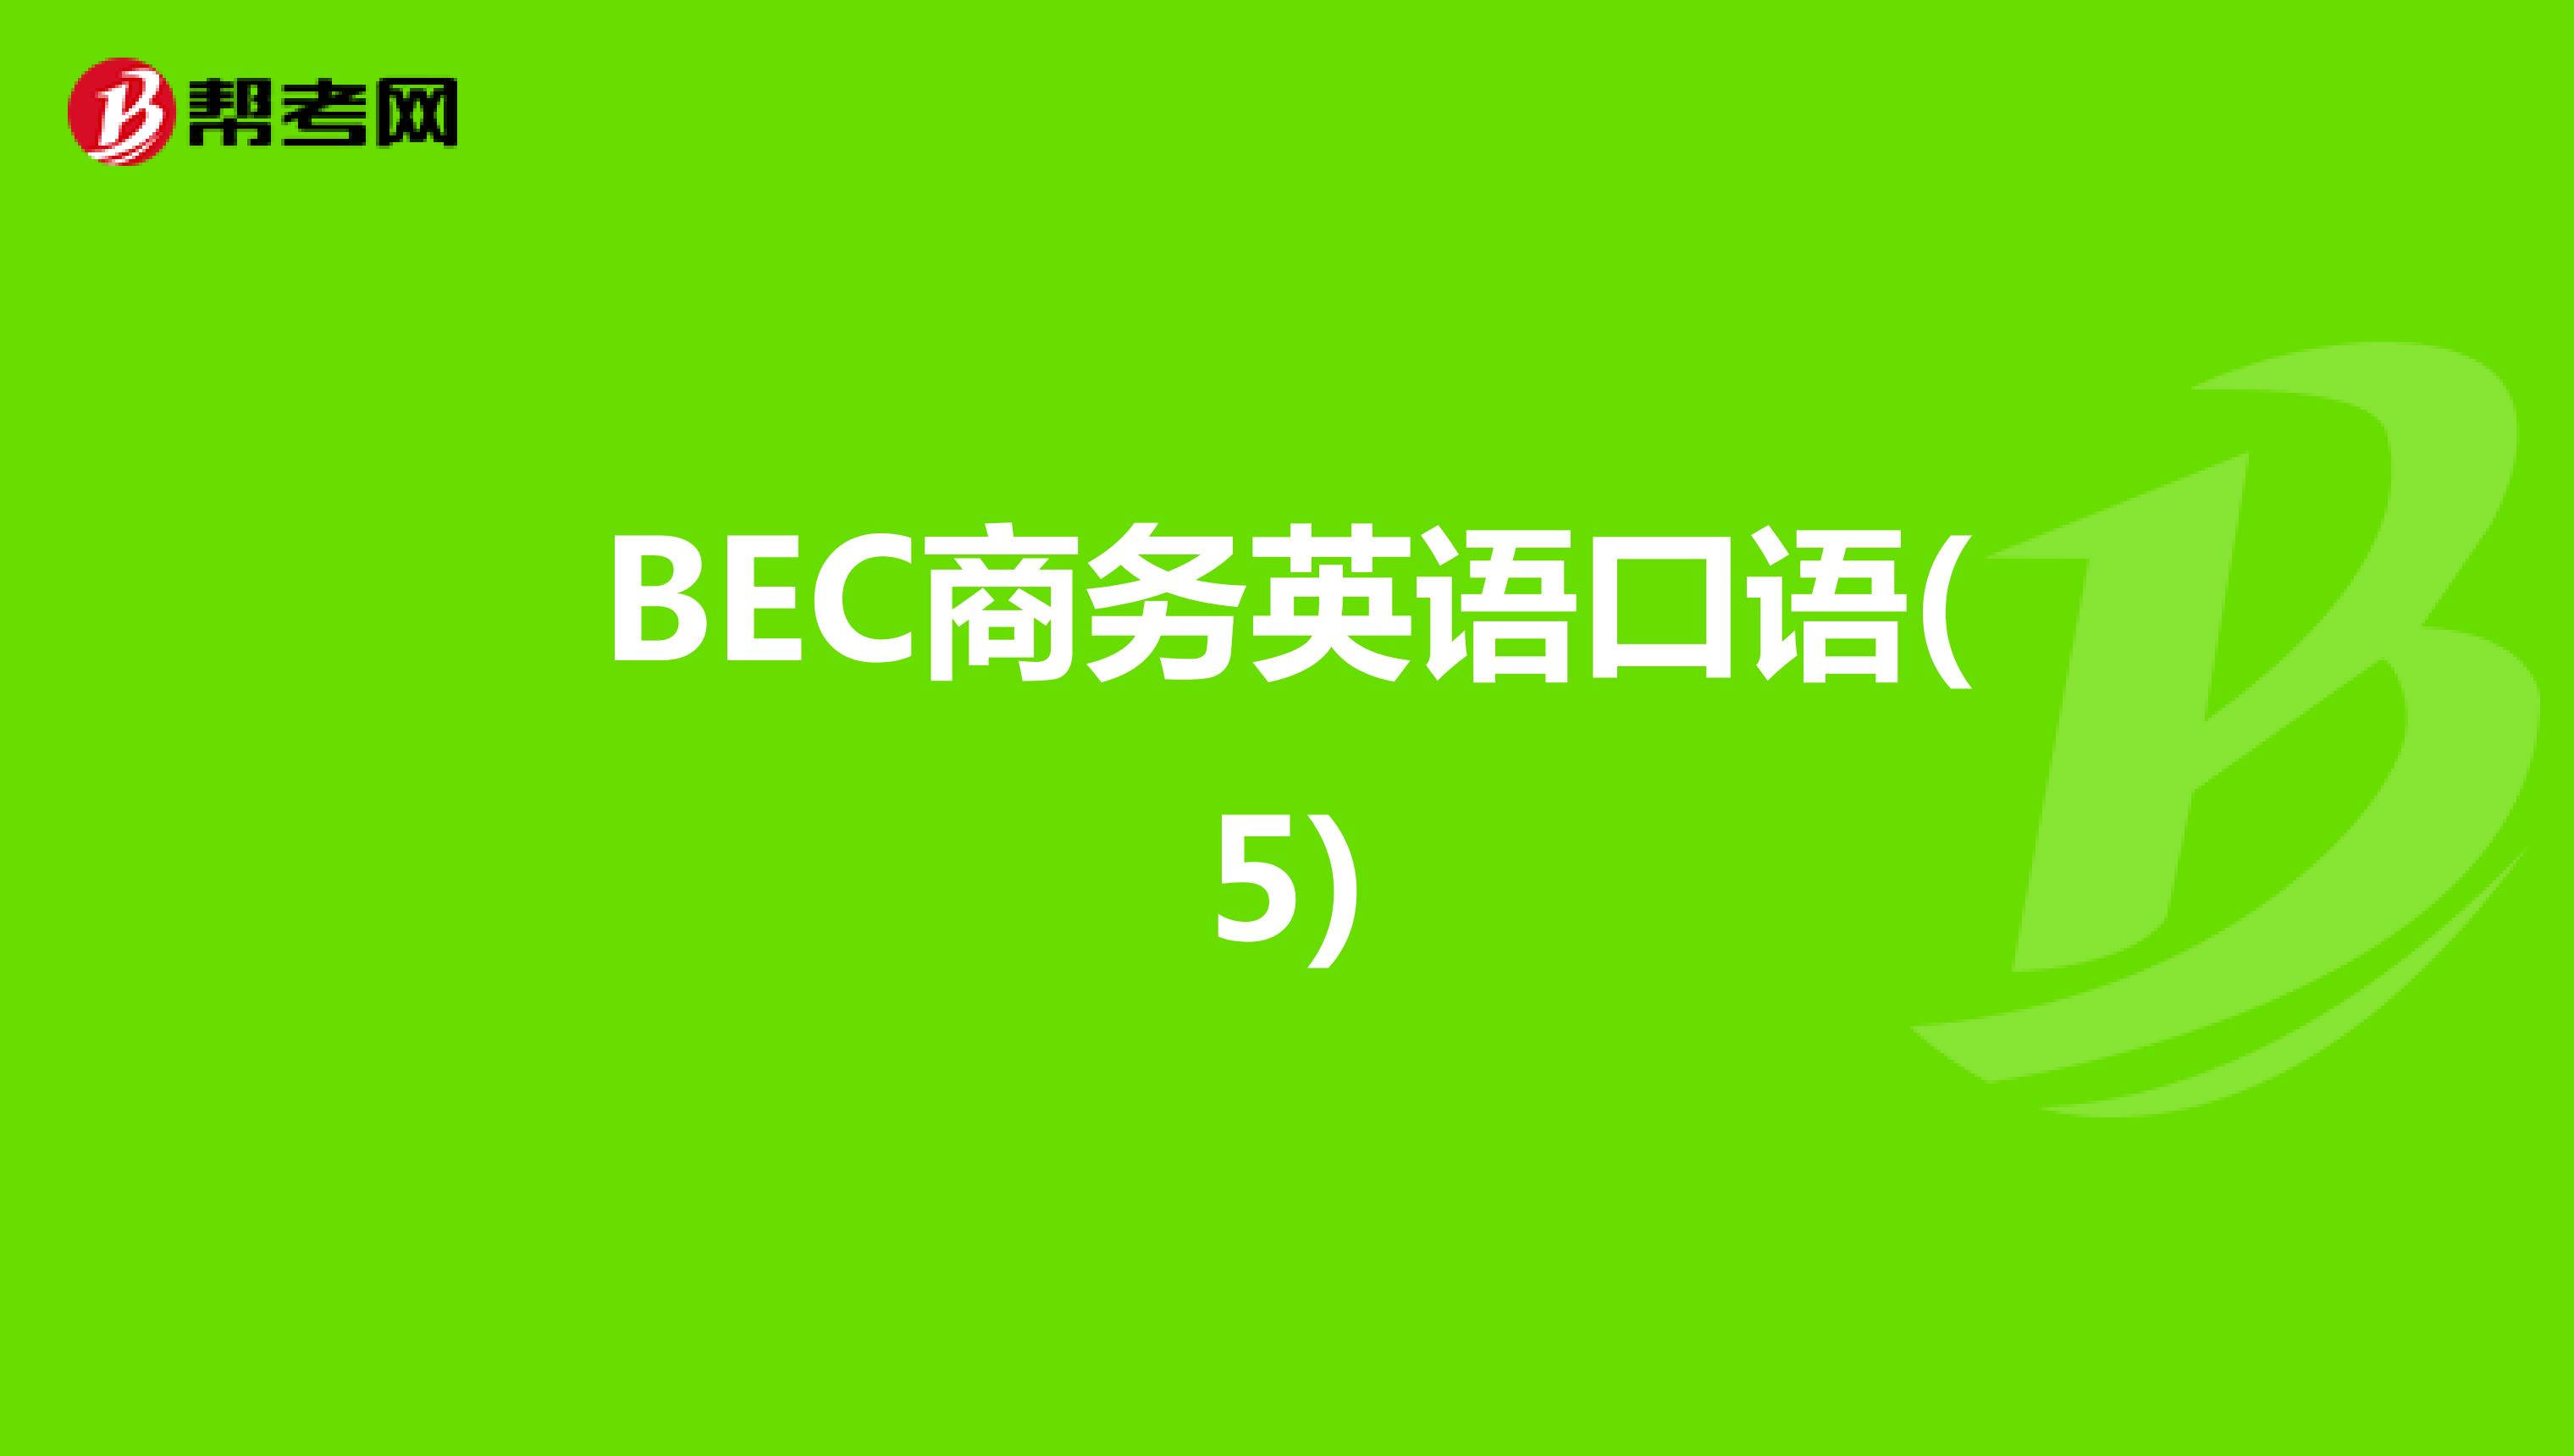 BEC商务英语口语(5)